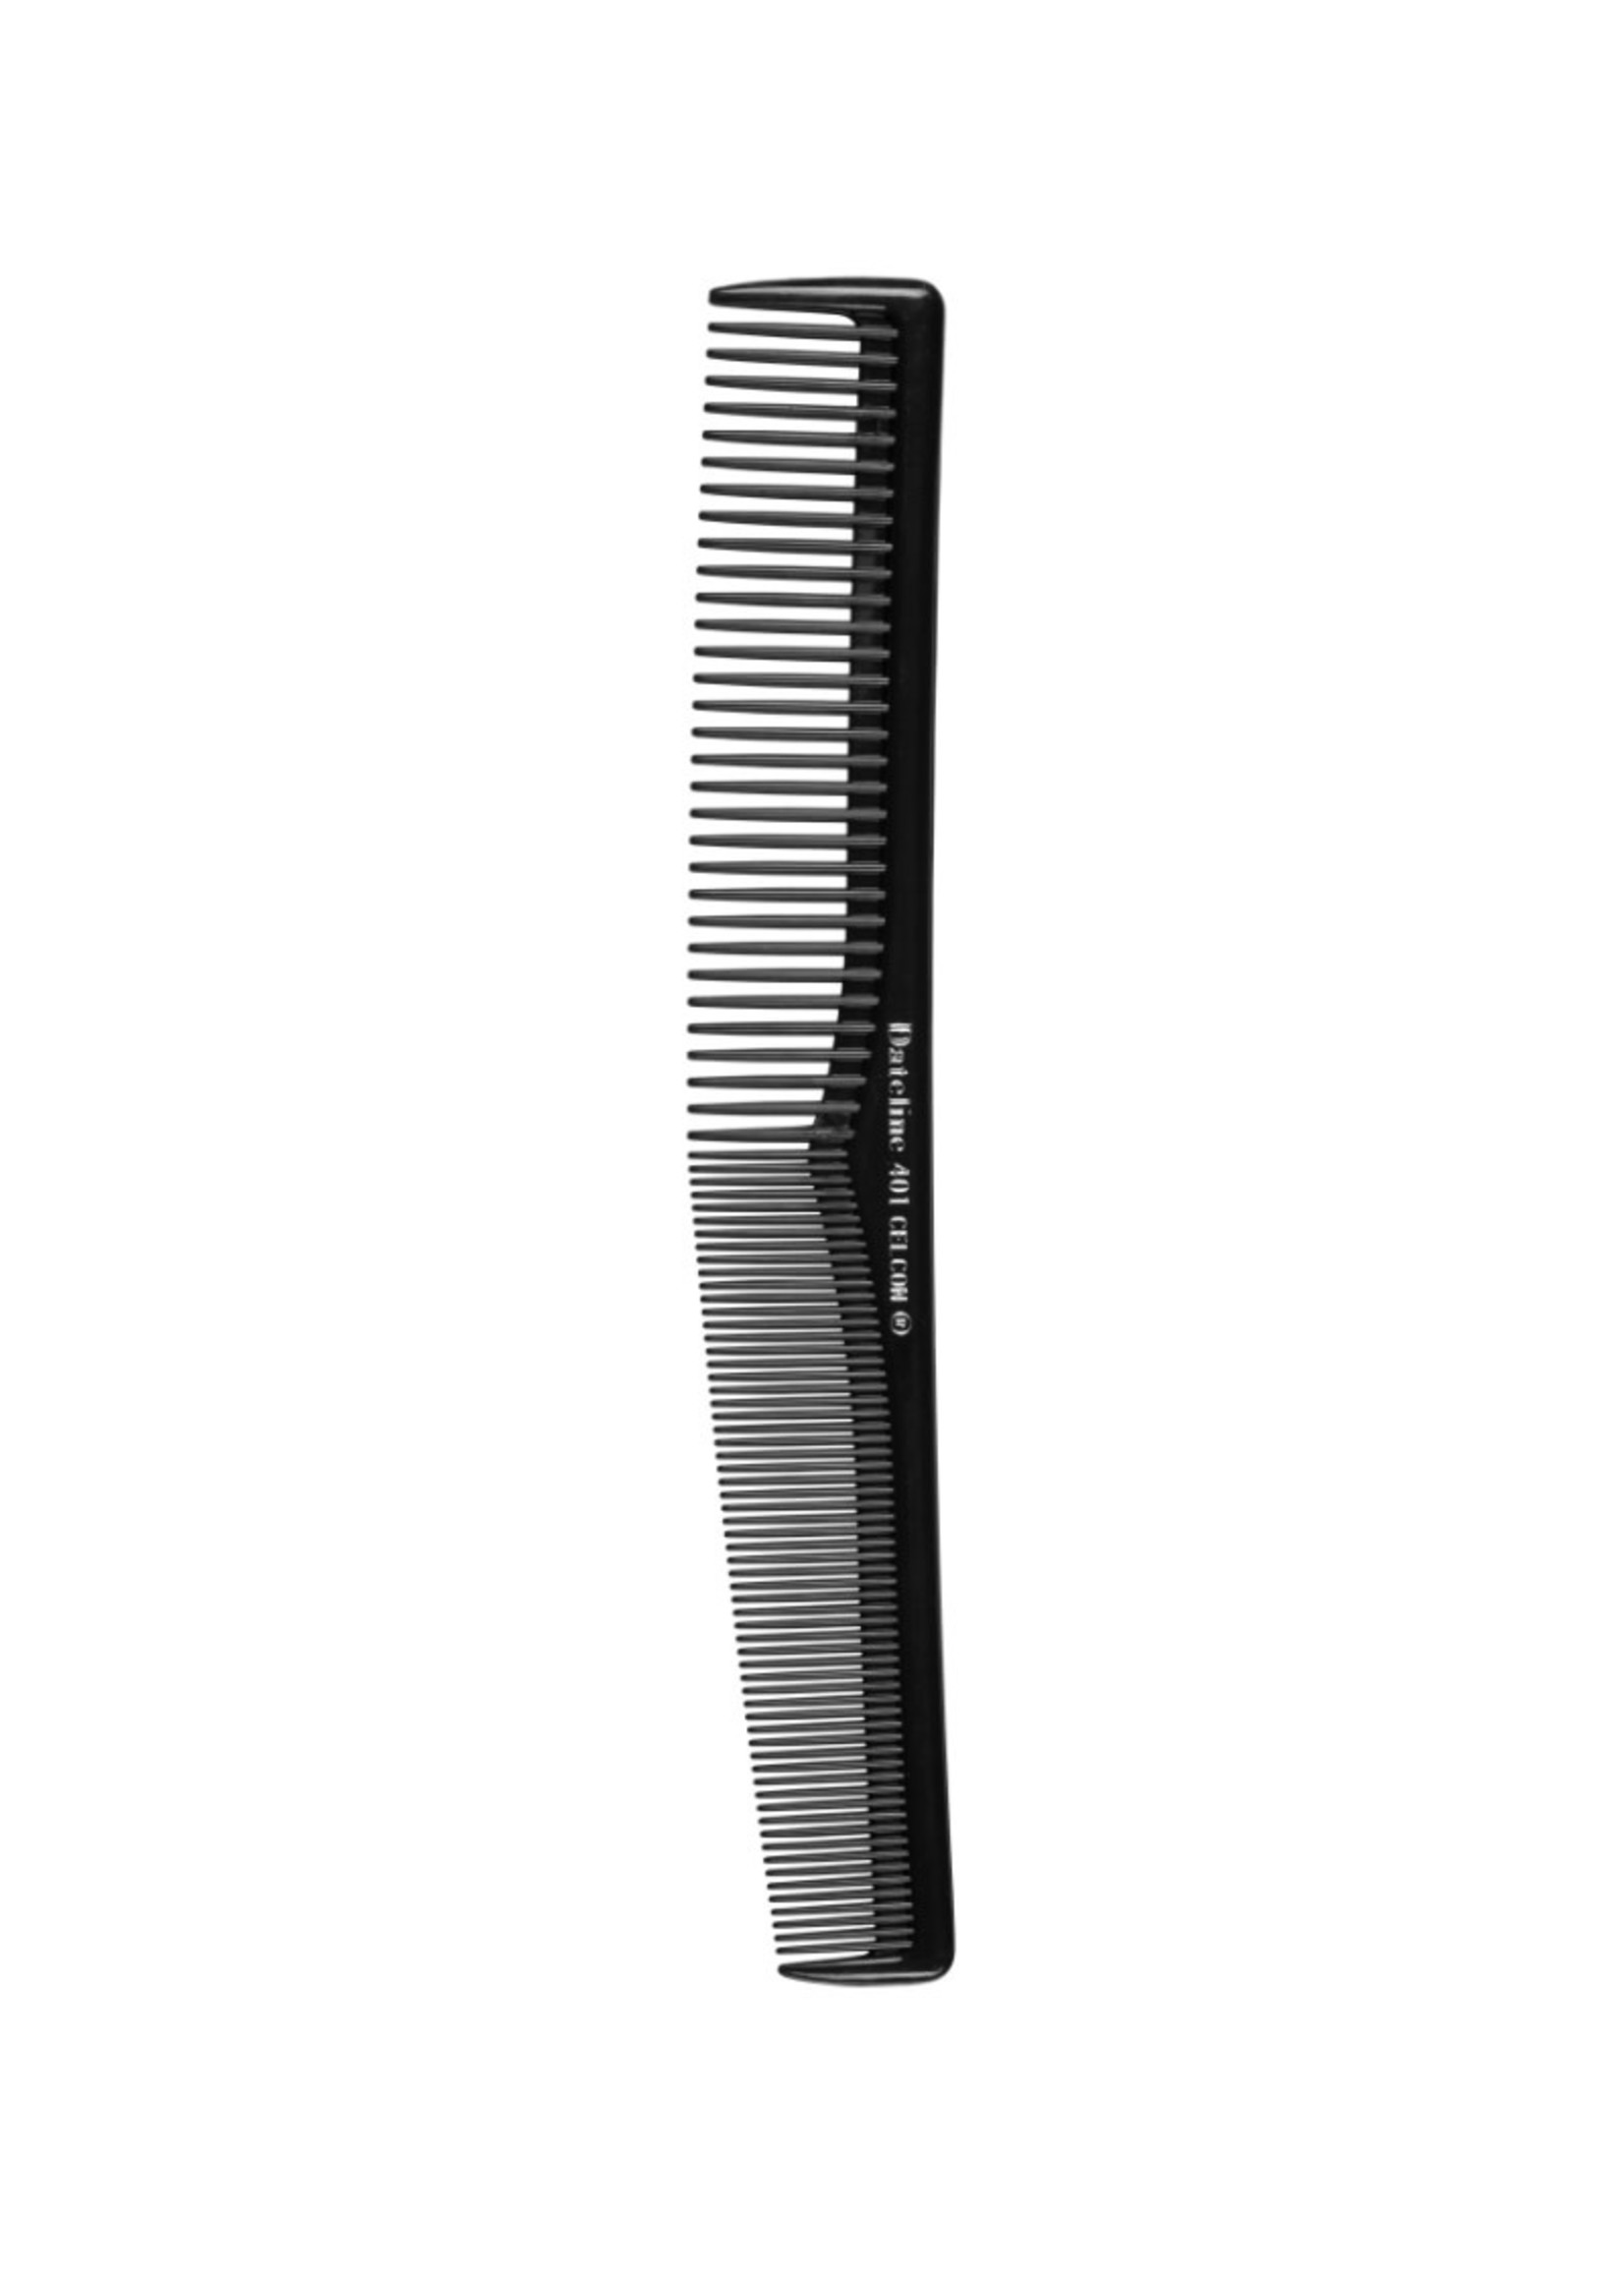 Dateline Dateline Black Celcon 401 Styling Comb